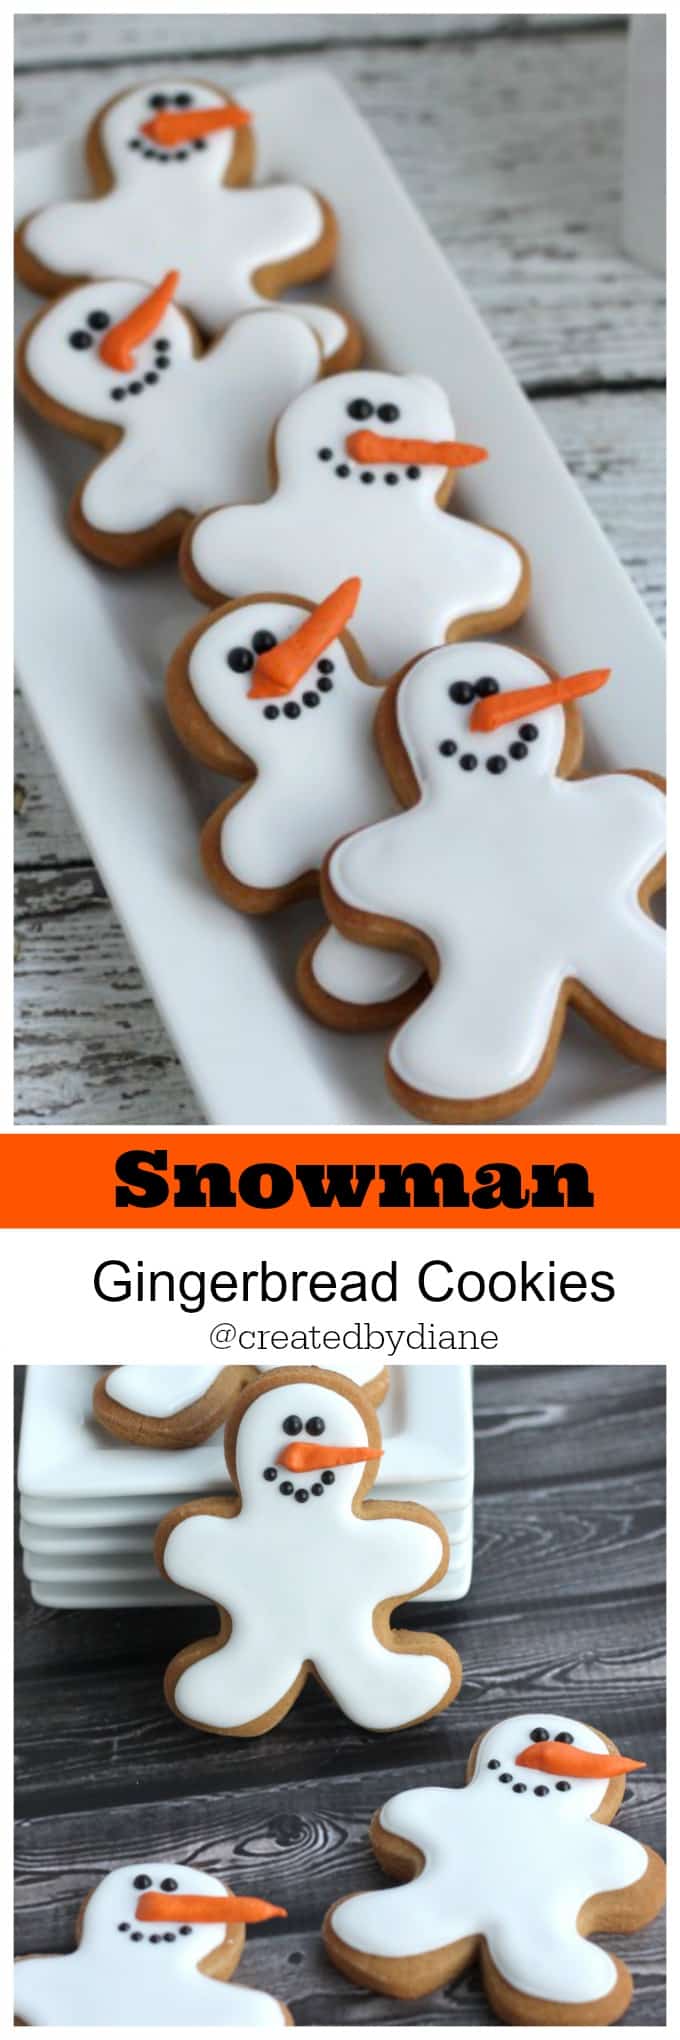 Snowman Gingerbread Cookies @createdbydiane